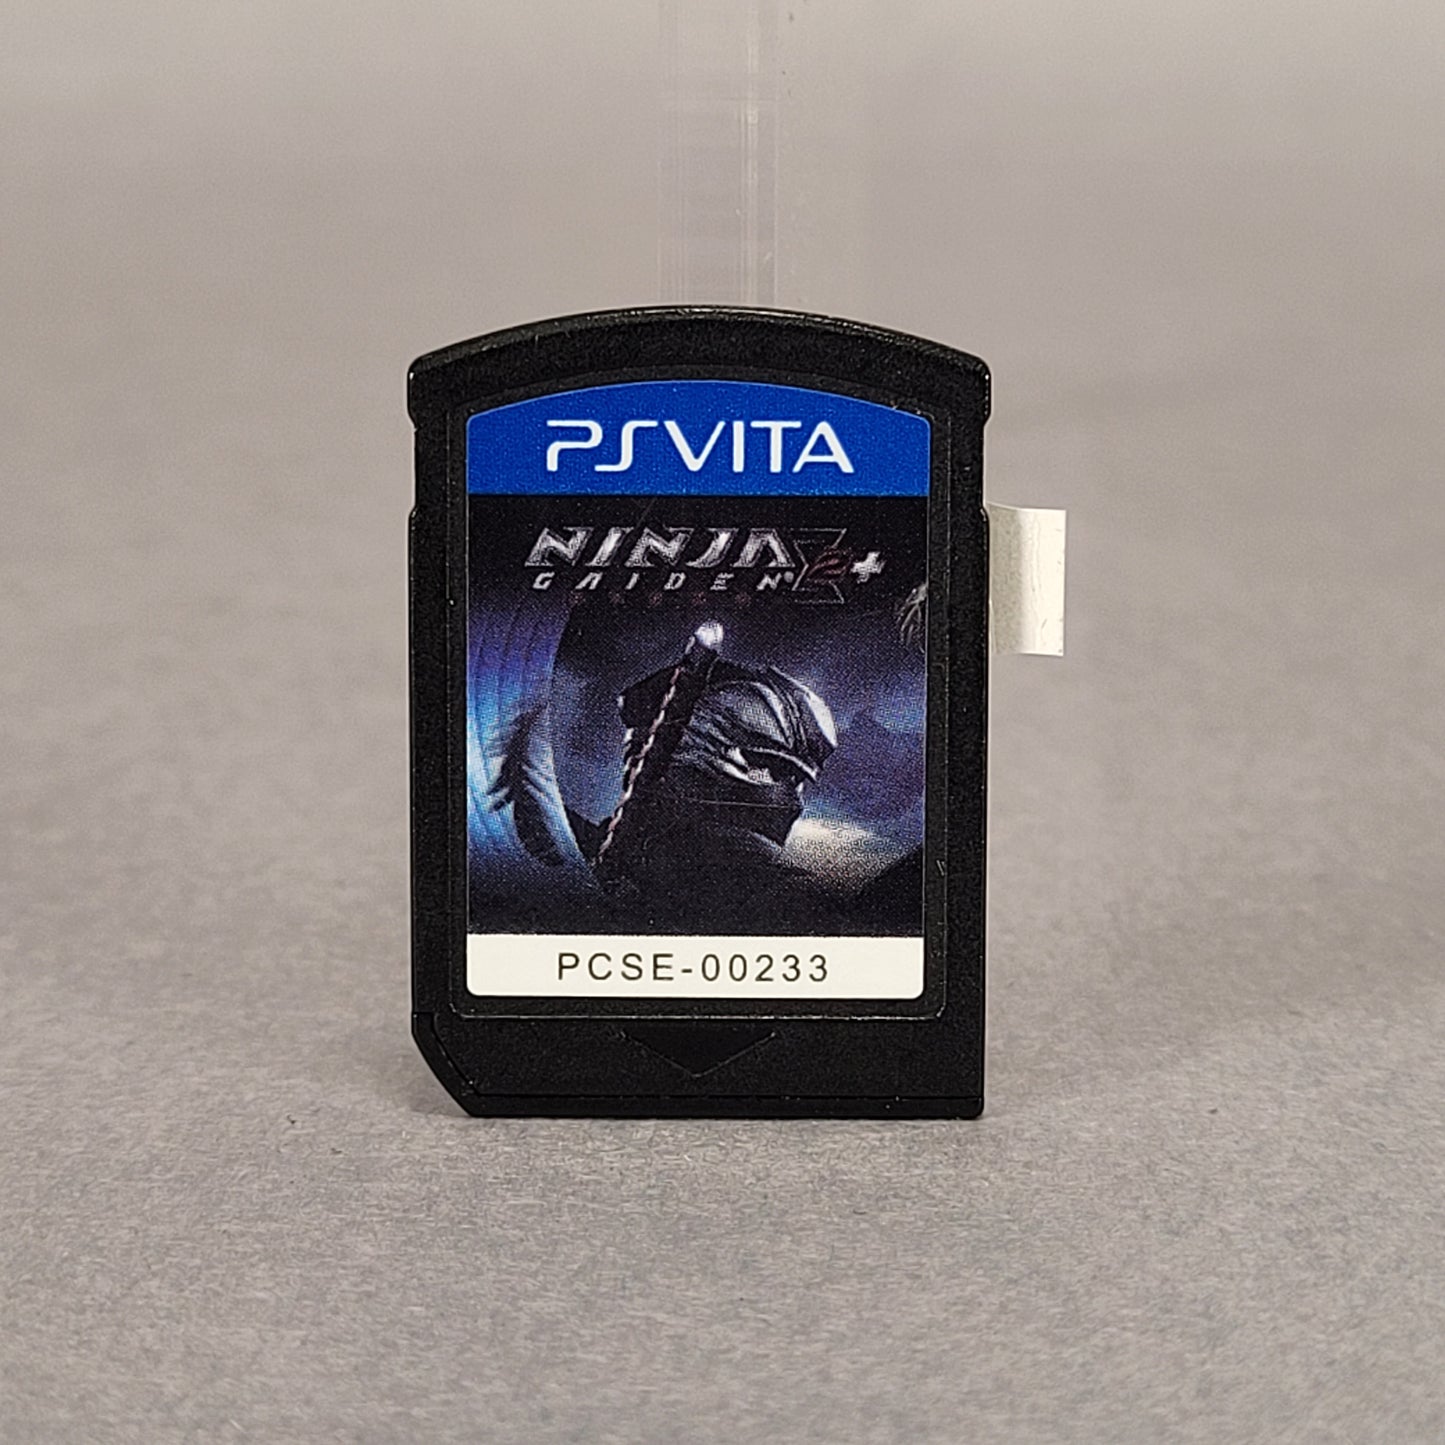 Ninja Gaiden Sigma 2 Plus for PS Vita